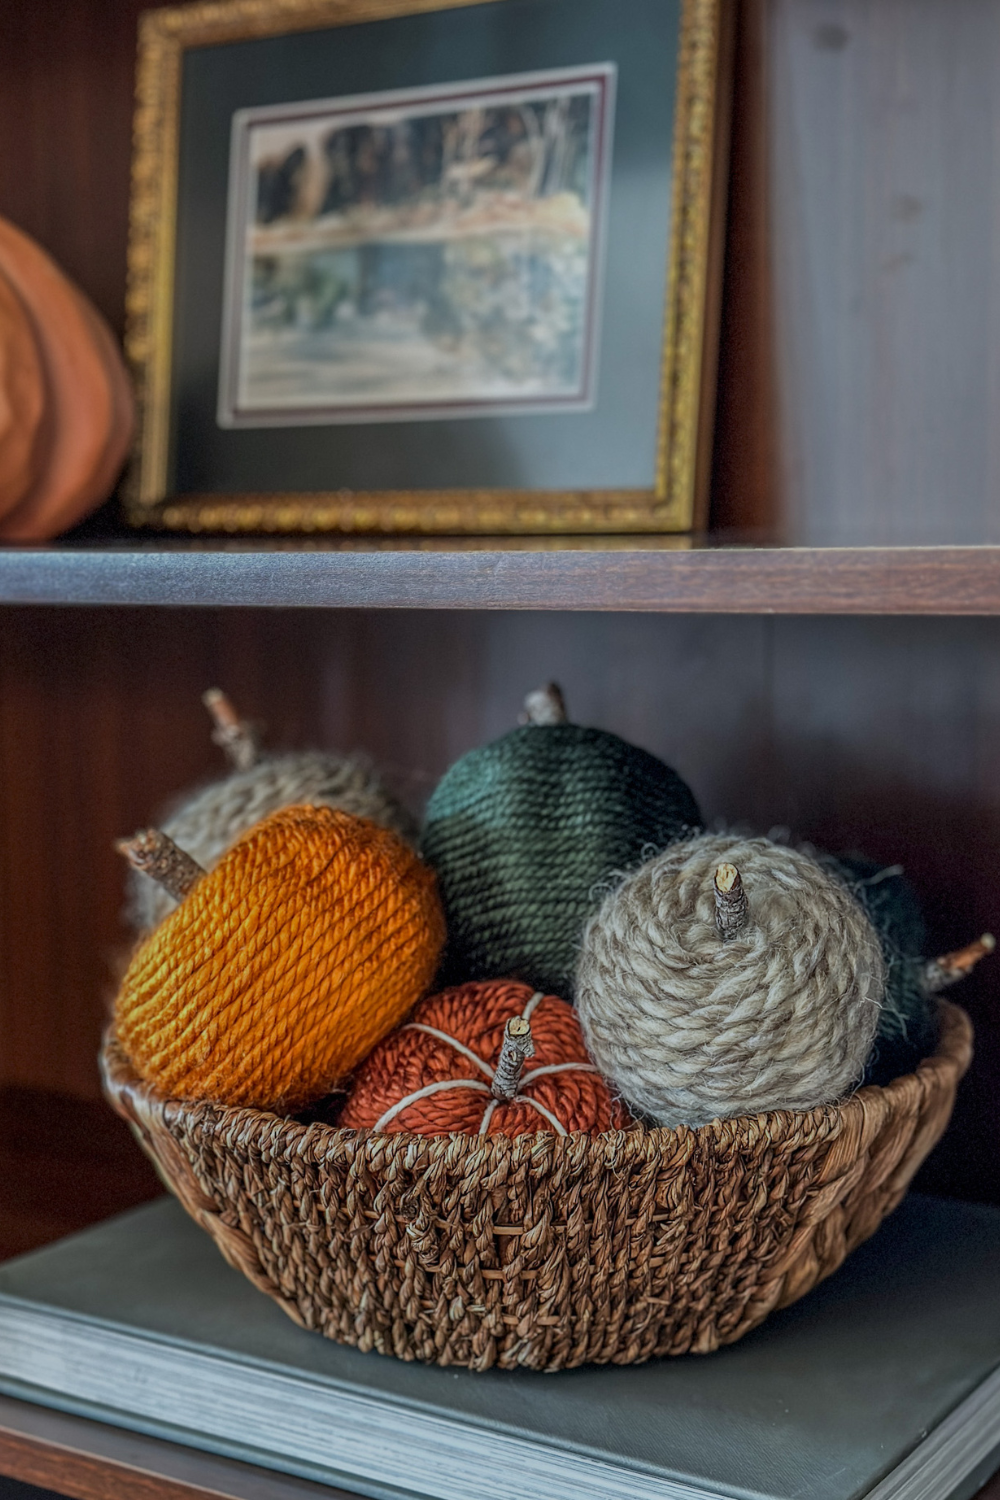 DIY Yarn Pumpkins